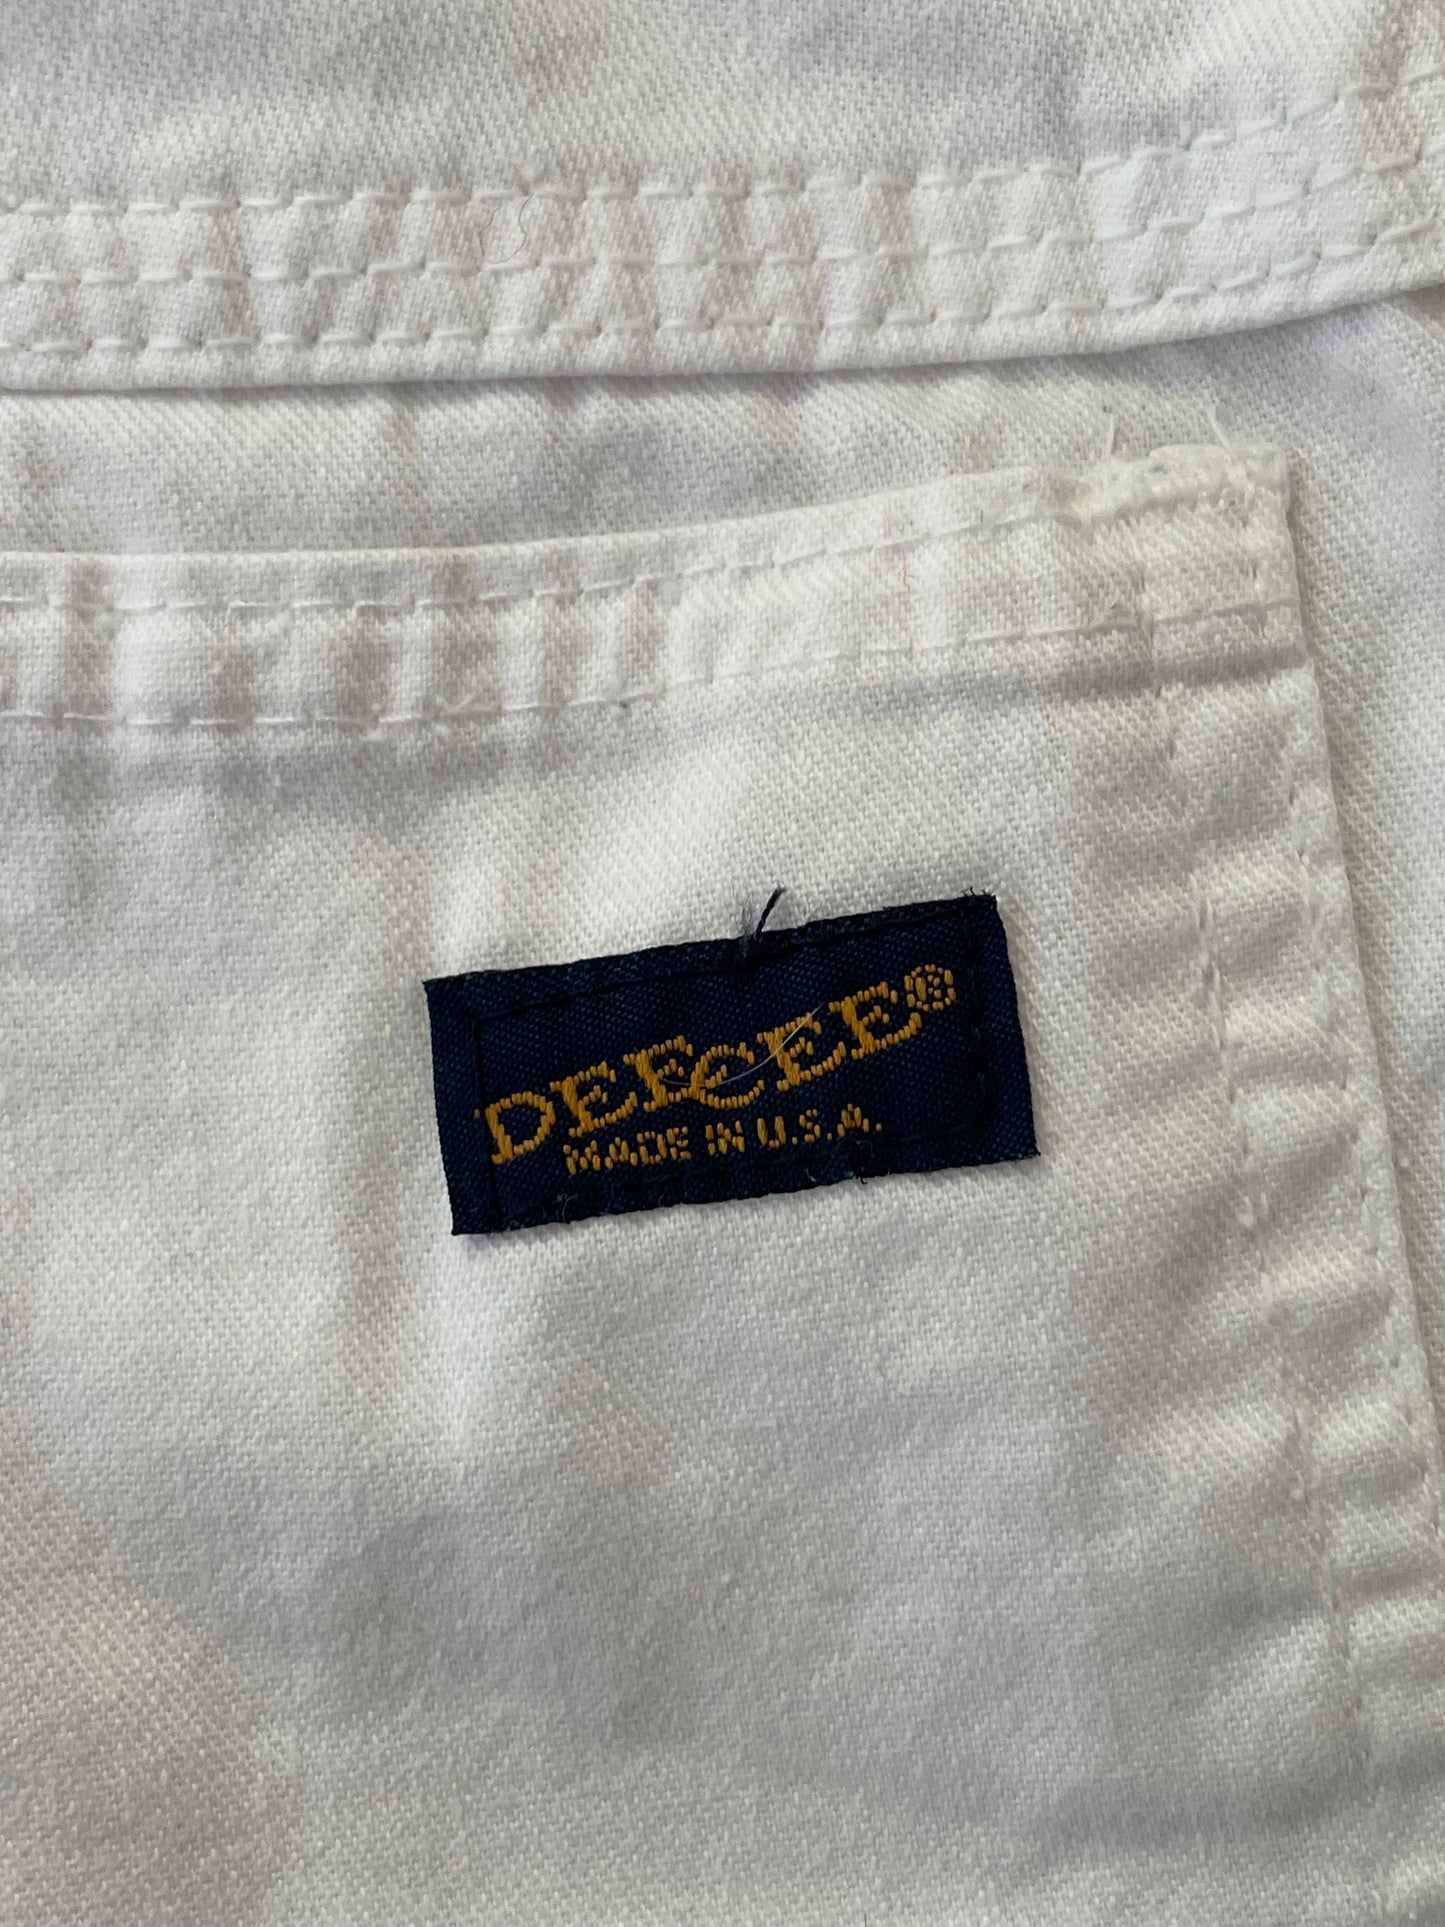 70s White DeeCee Carpenter Pants